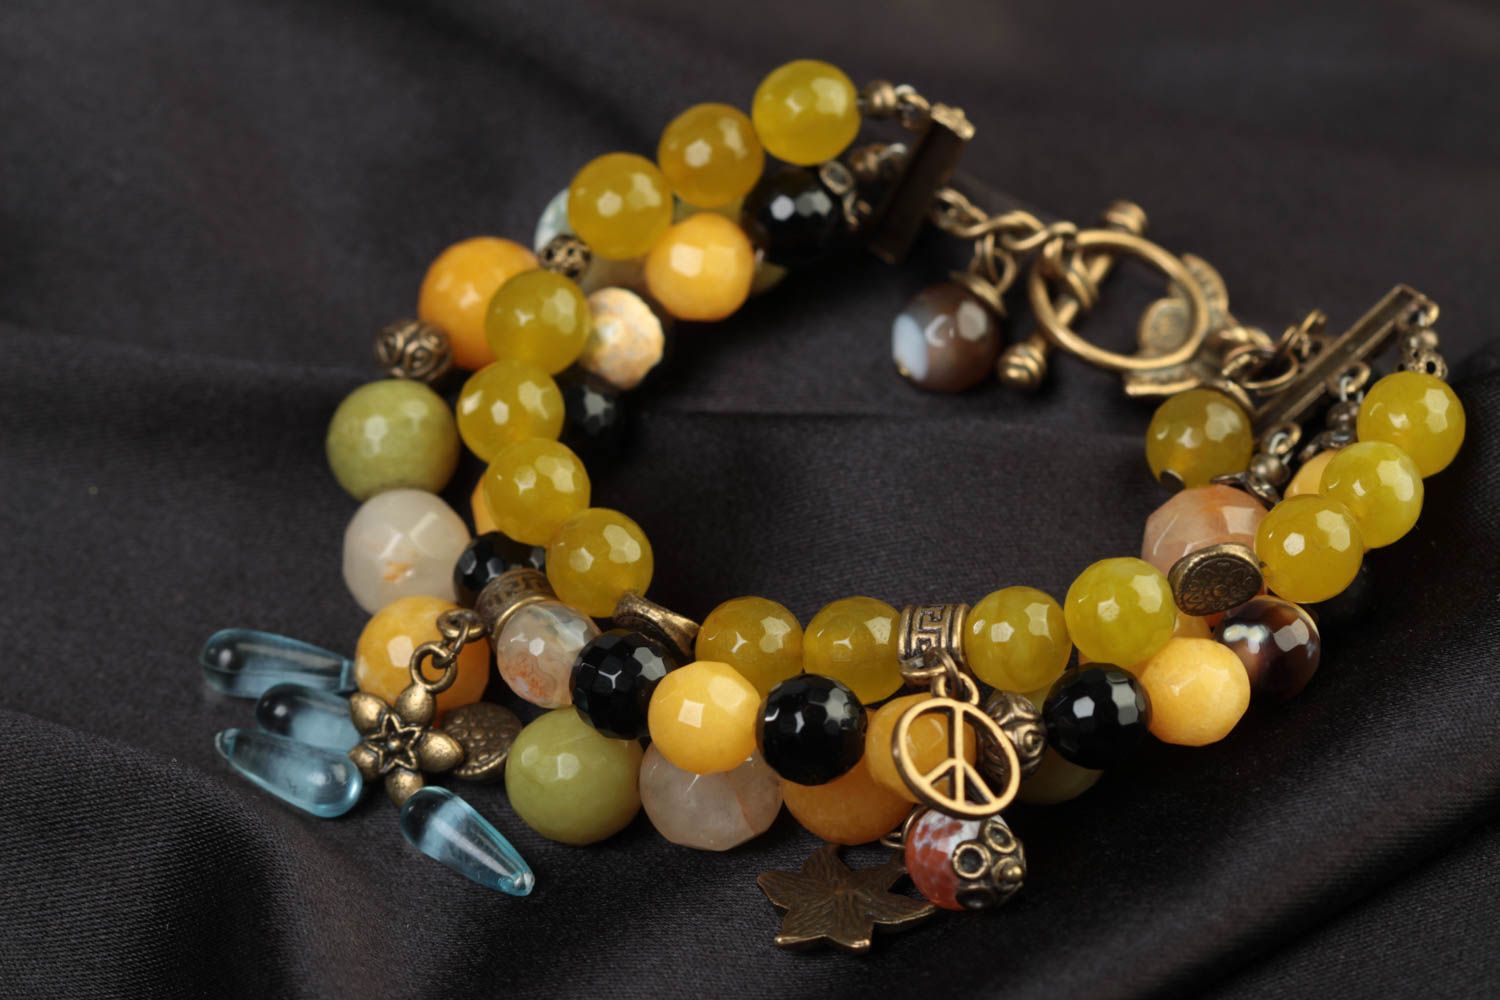 Handmade bracelet unusual accessory designer jewelry gift ideas unusual gift photo 1